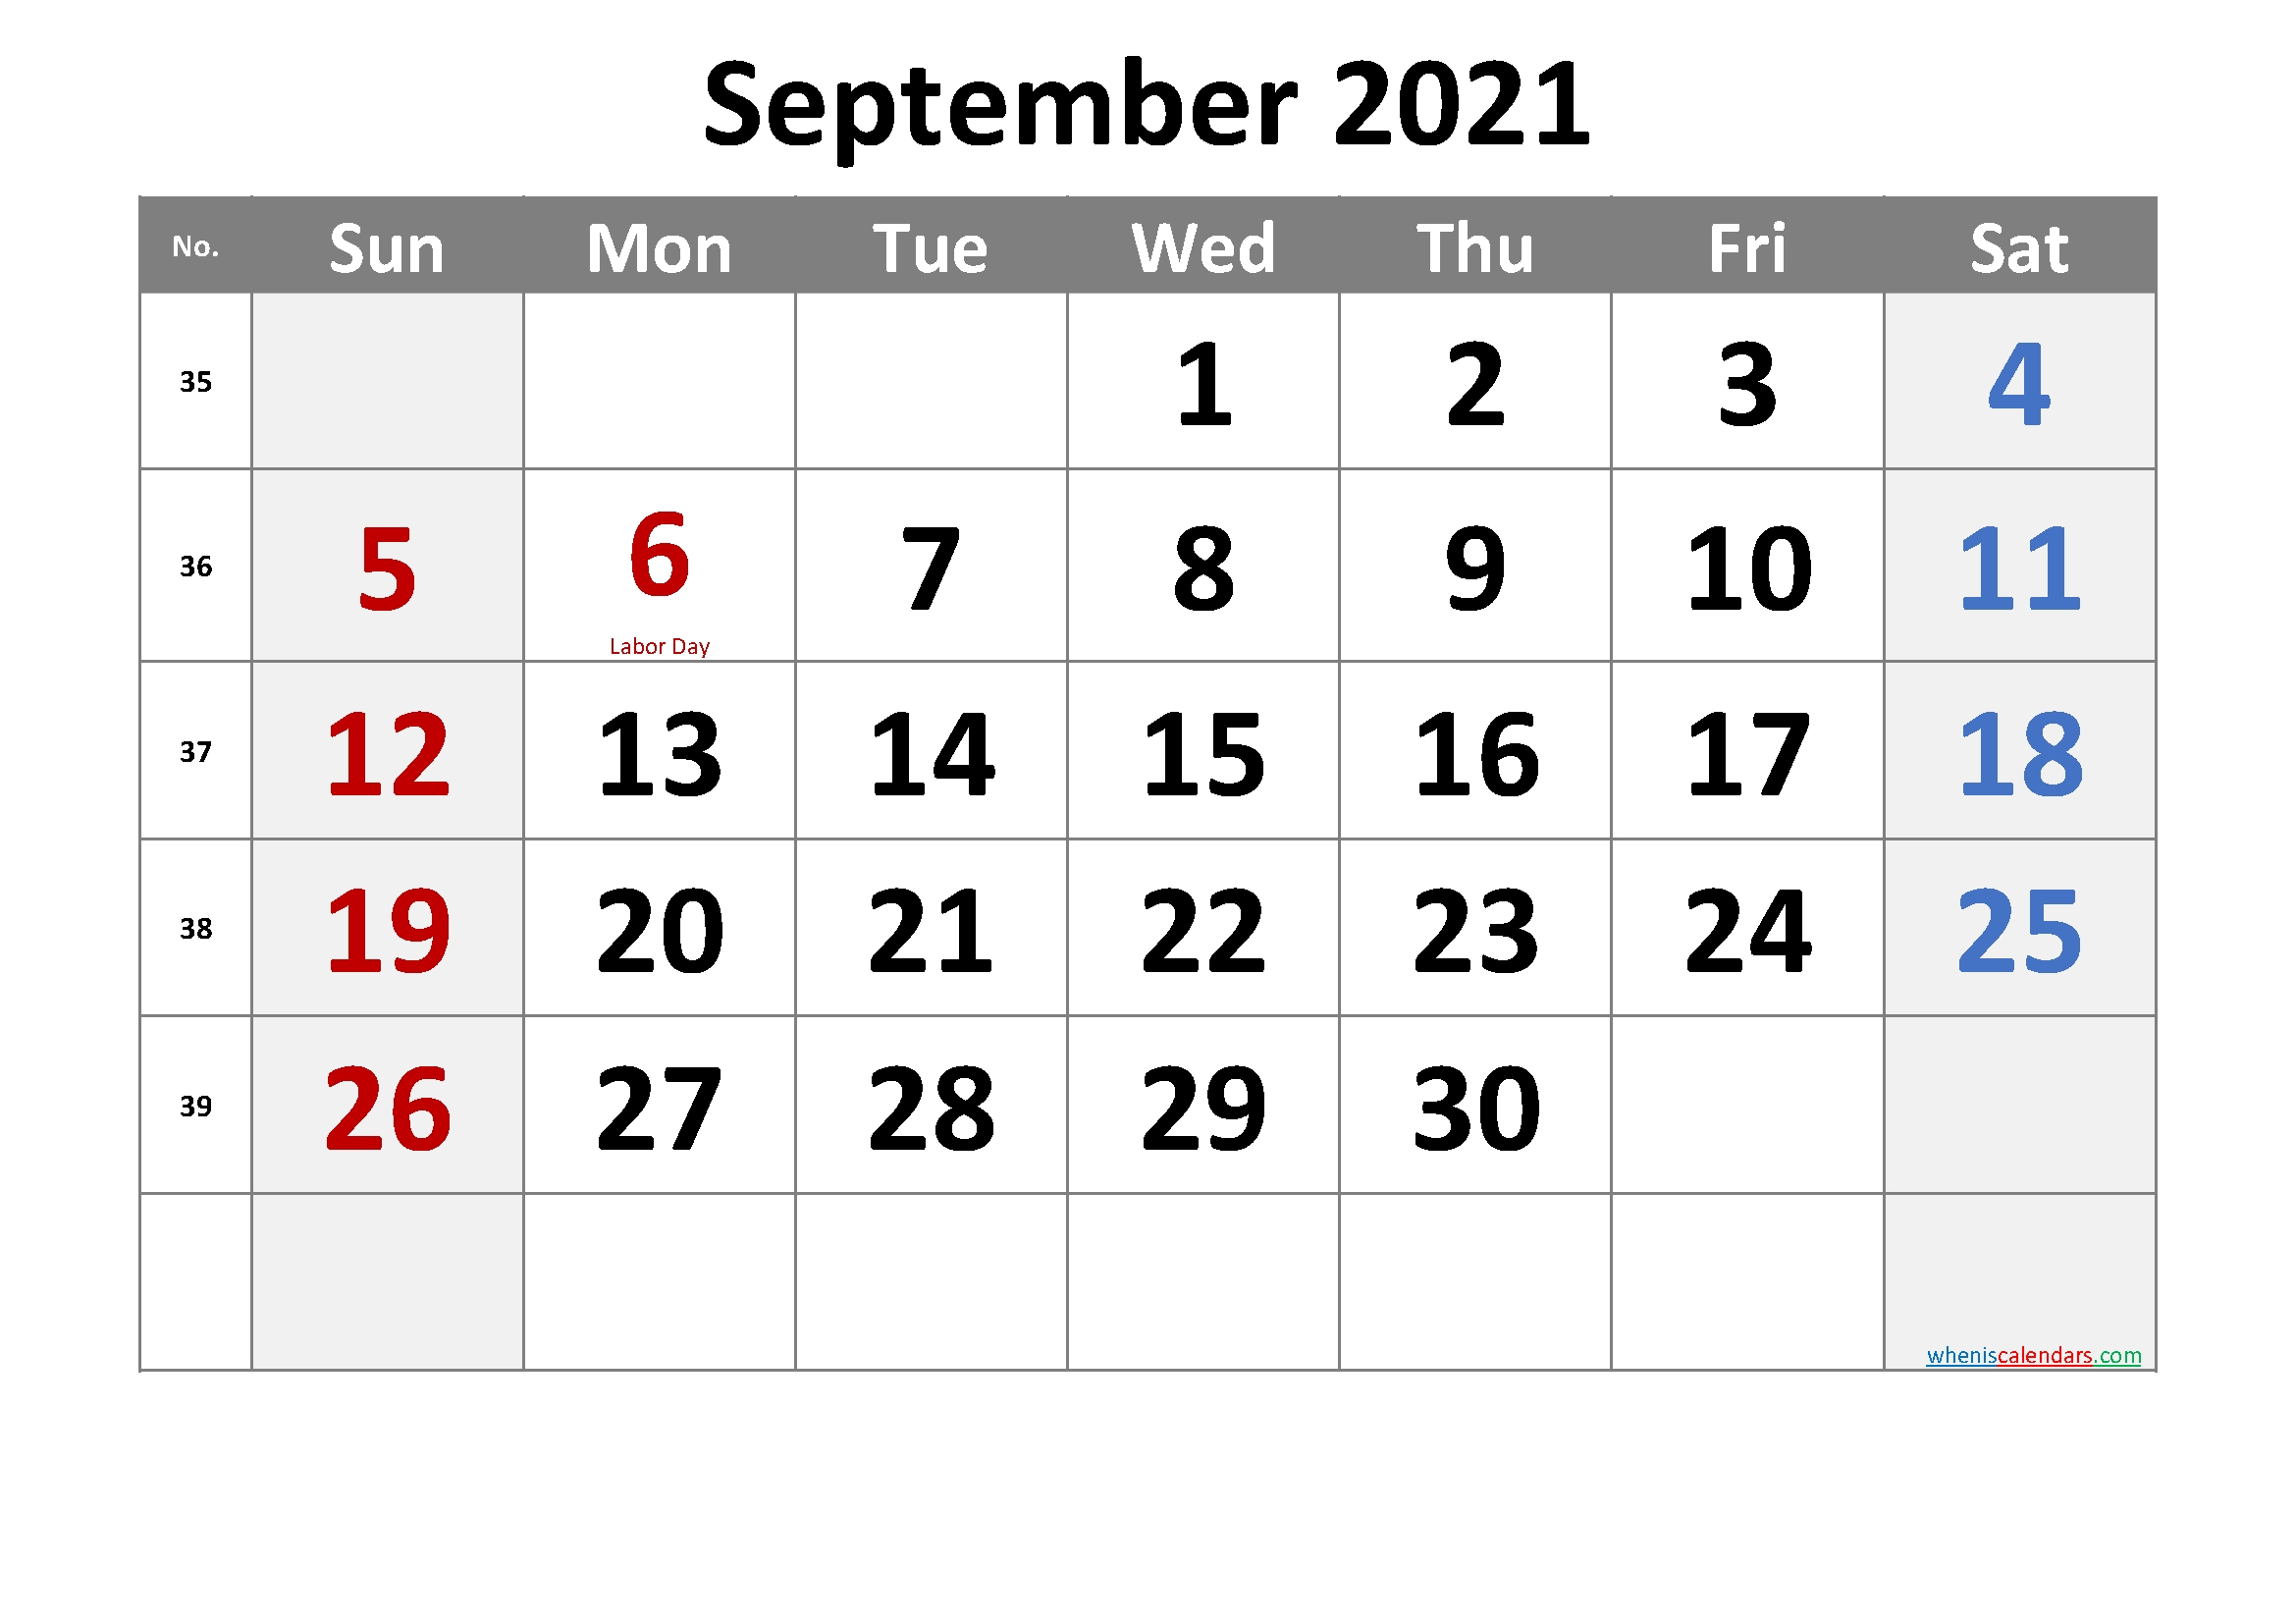 April 2021 Printable Calendar With Holidays - 6 Templates | Free Printable 2020 Calendar With September 2021 Calendar With Holidays